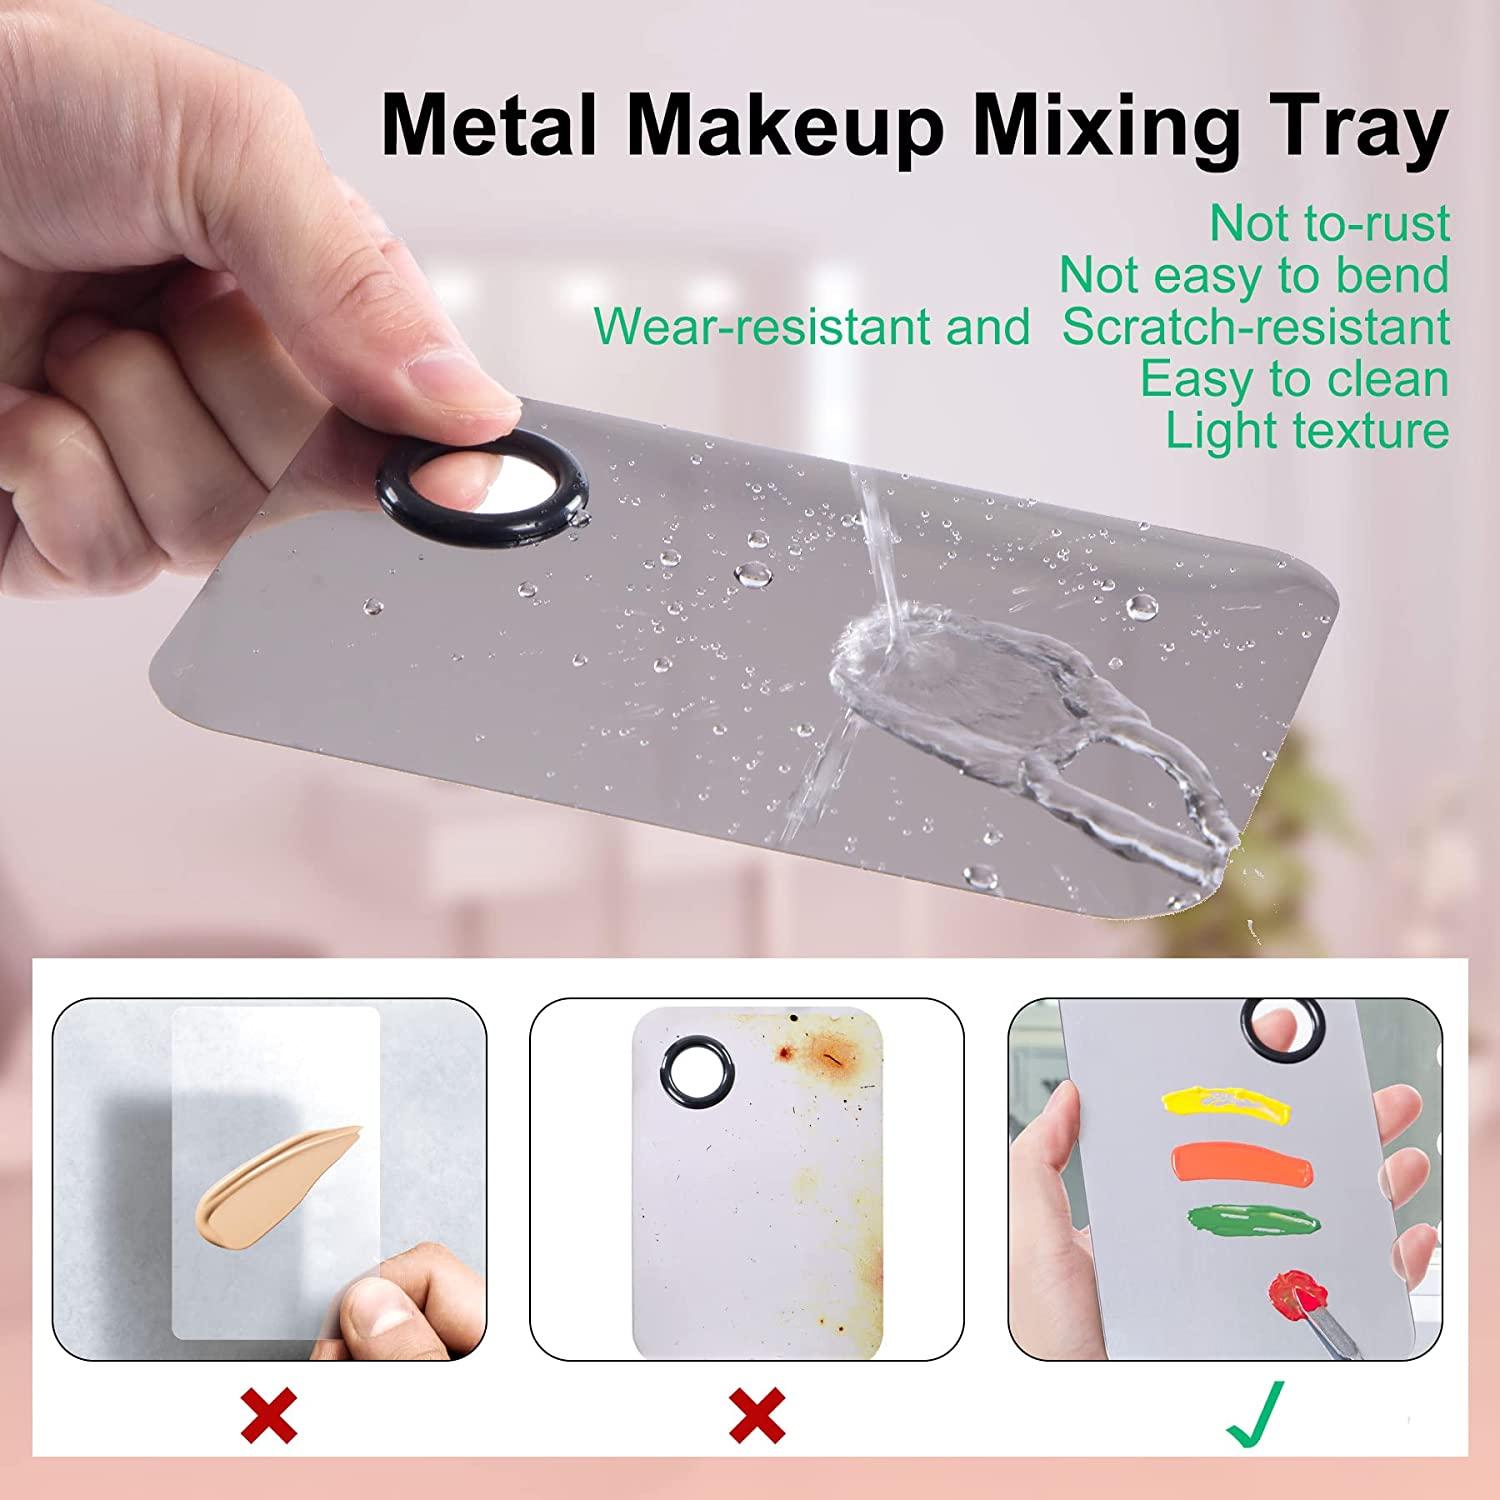 Makeup Mixing Tray